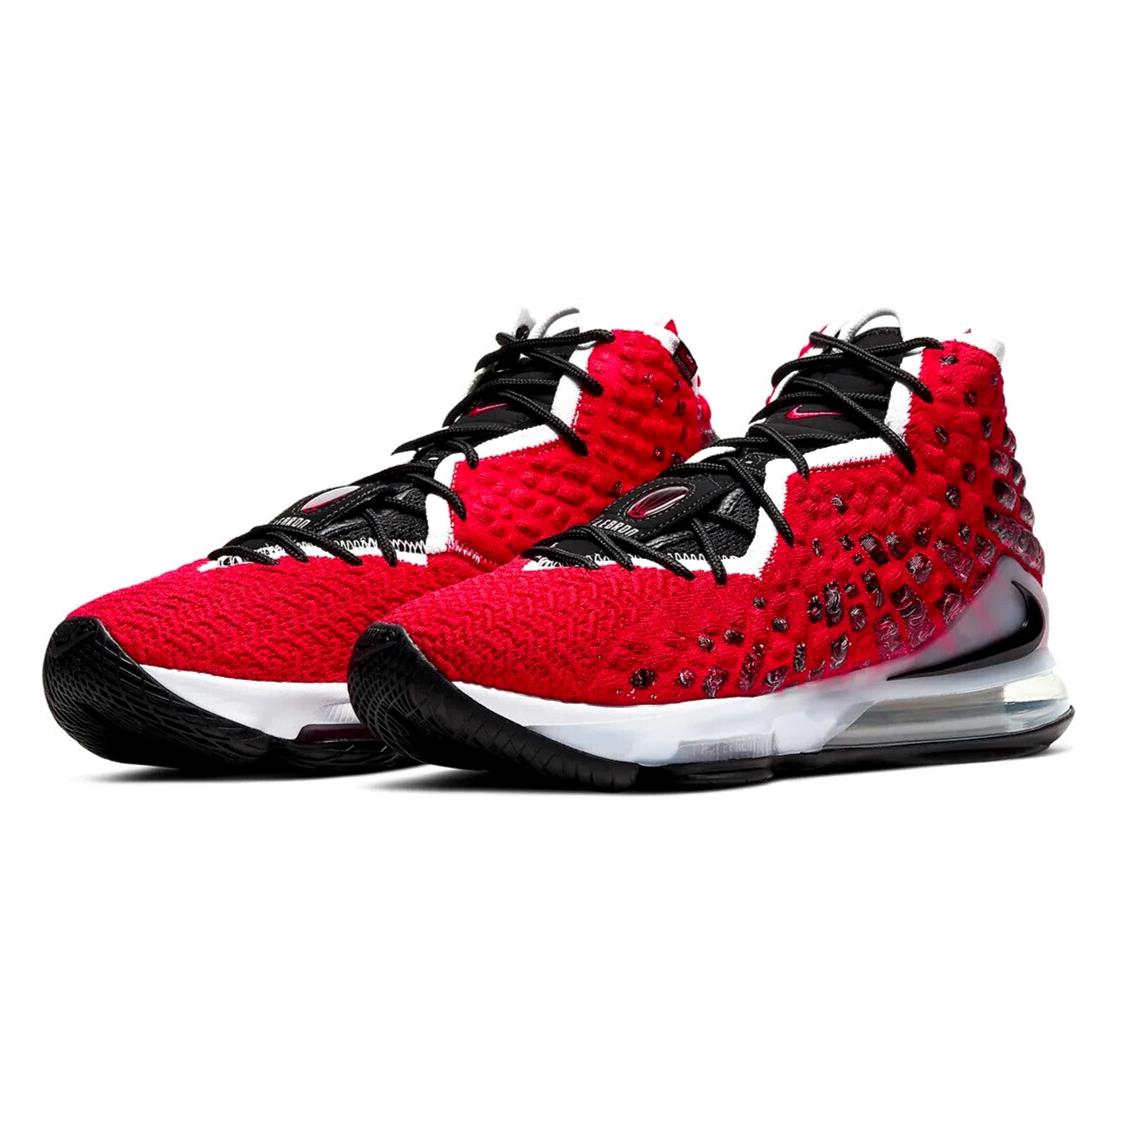 Nike Lebron 17 Air Max Uptempo 2020 Mens Size 6.5 Shoes BQ3177 601 Multicolor - Multicolor